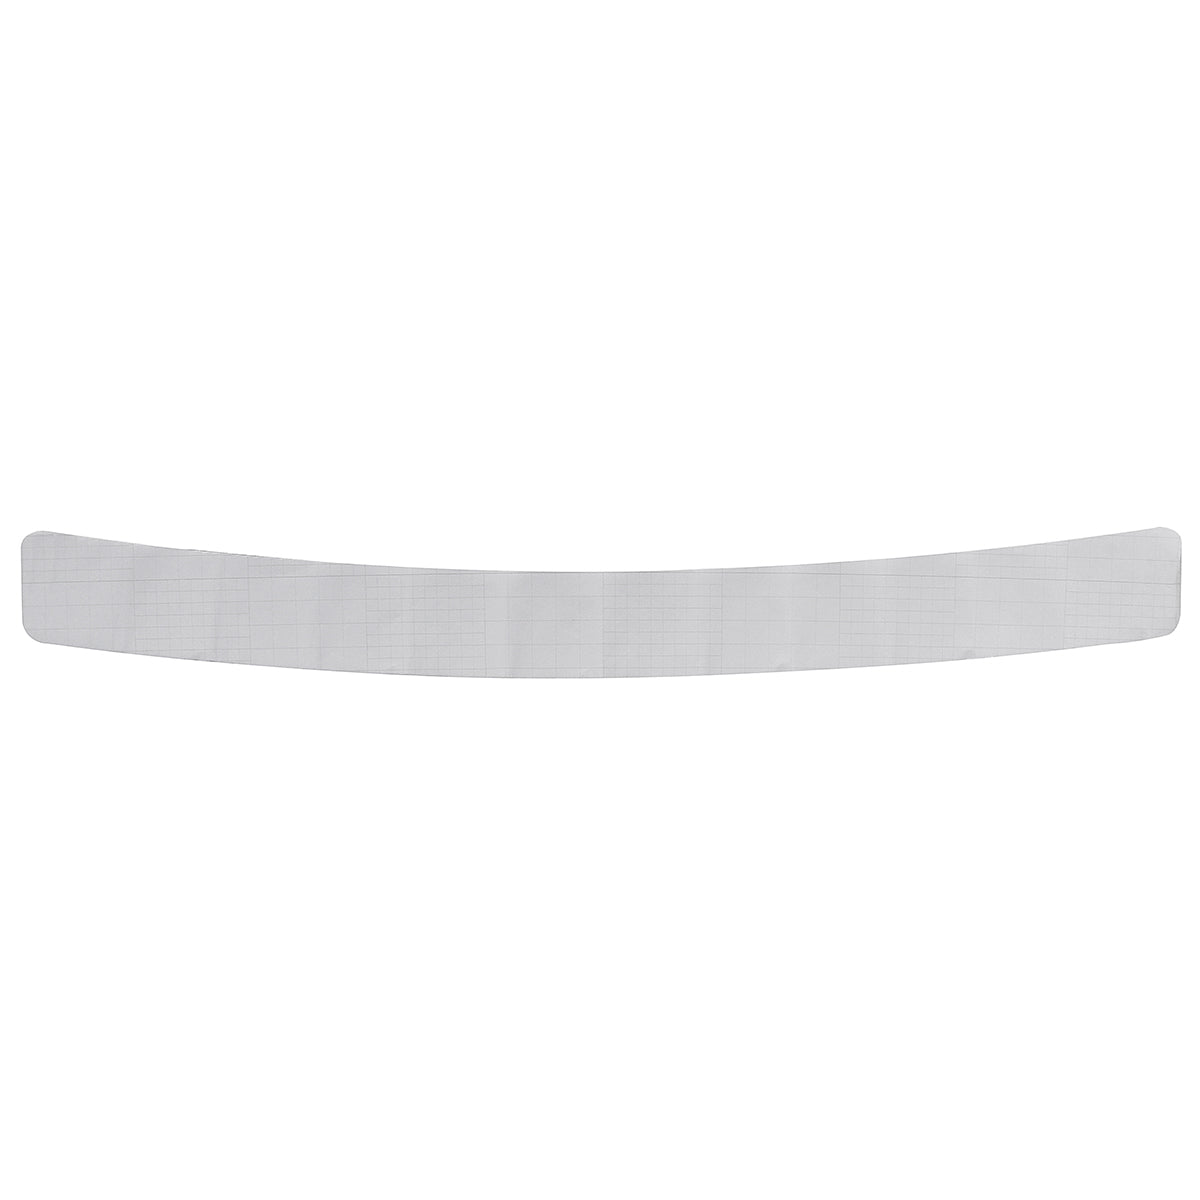 Light Gray Carbon Fiber Sticker Vinyl Decal Car Tail Trunk Sill Plate Bumper Guard Protector Cover Trim